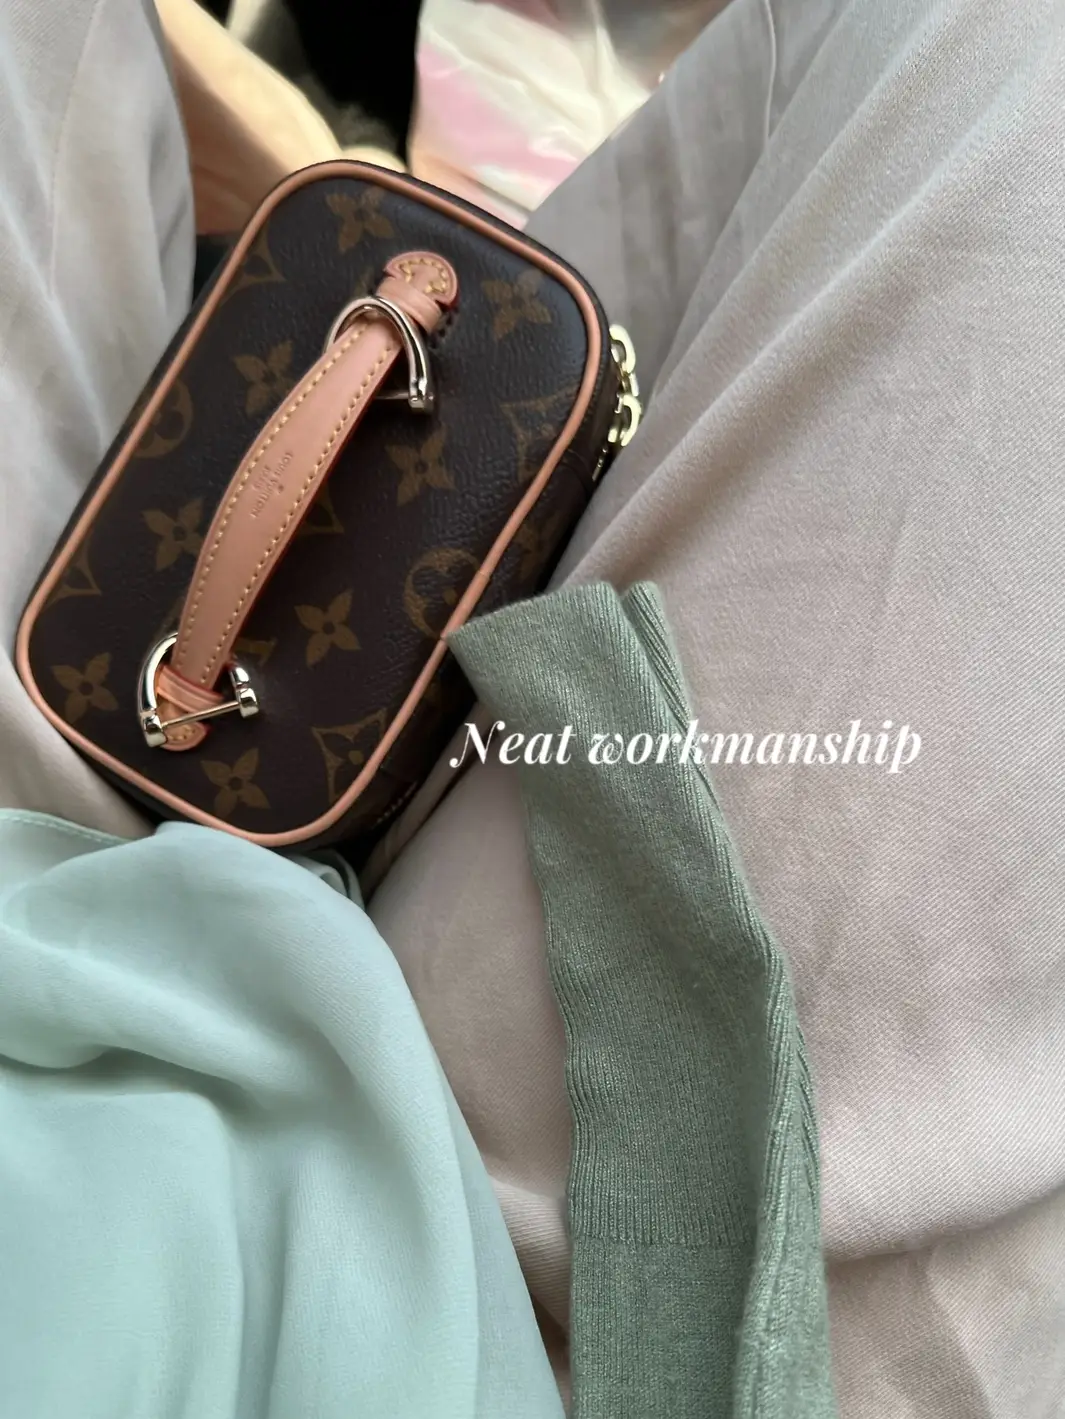 Louis Vuitton Double Zip Pochette / In The Bag Episode 